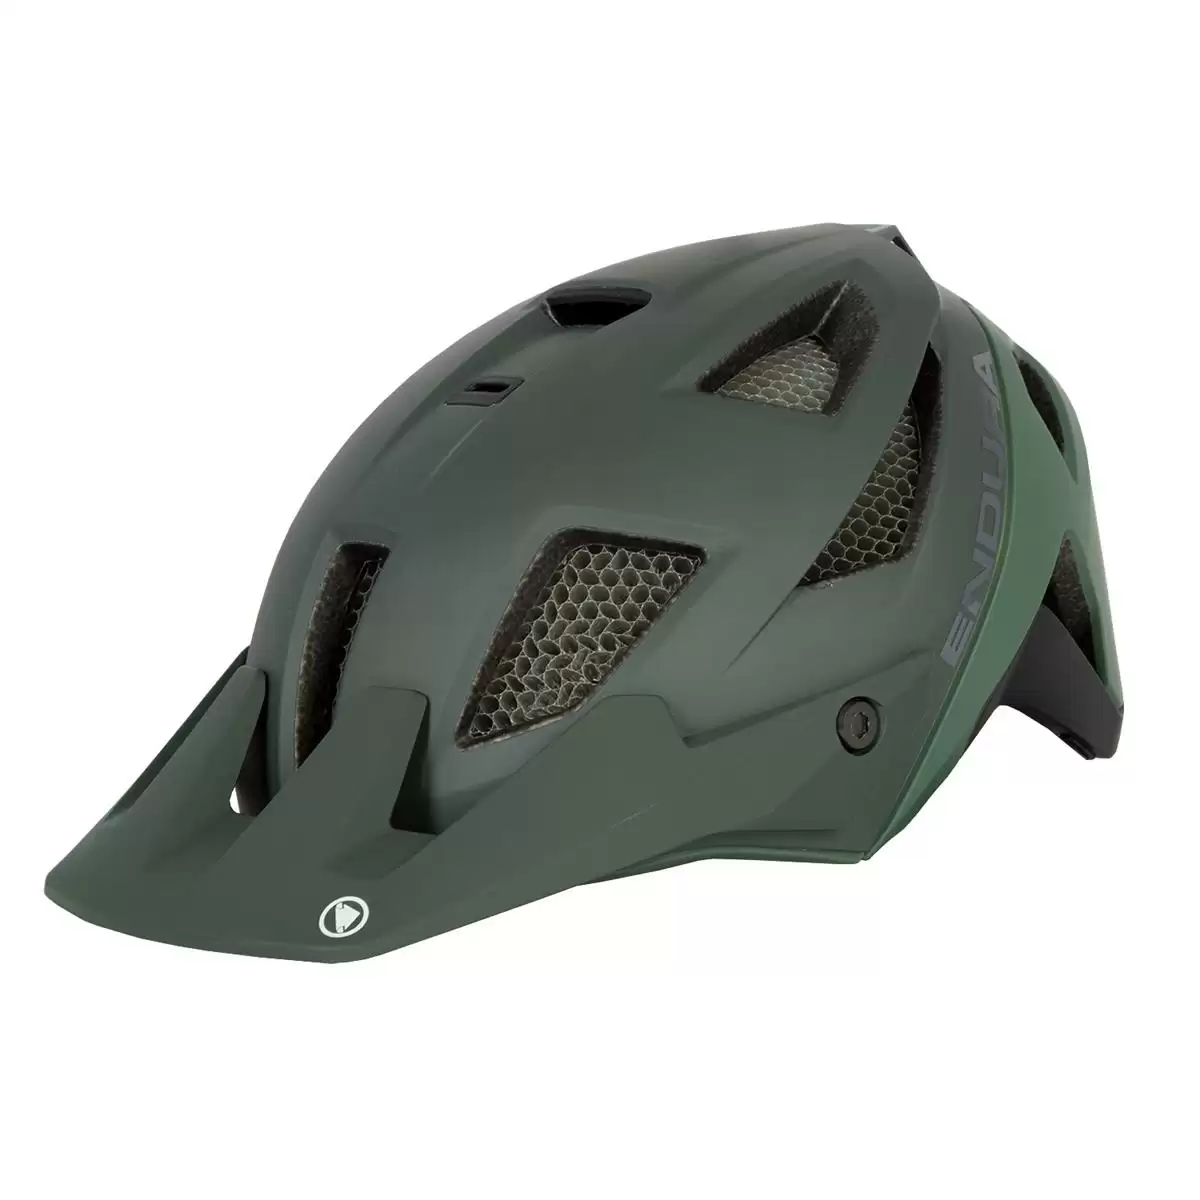 MT500 helmet forest green size S/M (51-56cm) - image